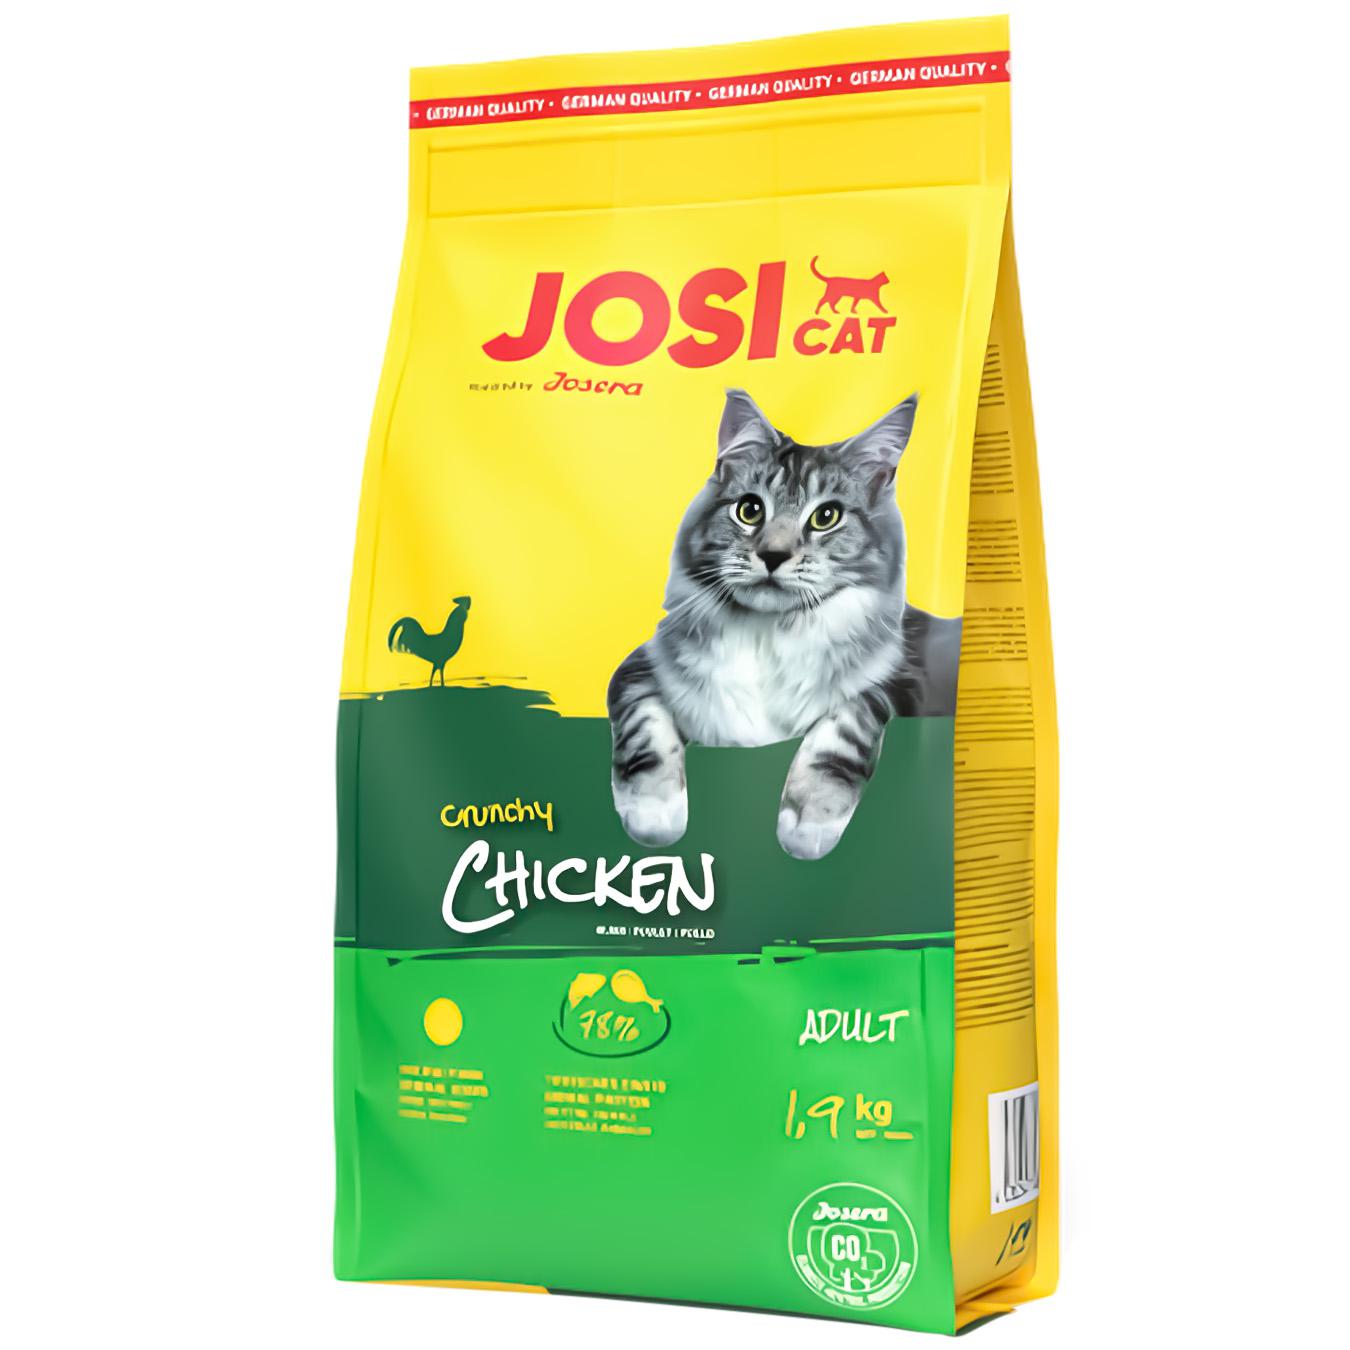 Josicat cat food dry chicken 1.9 kg